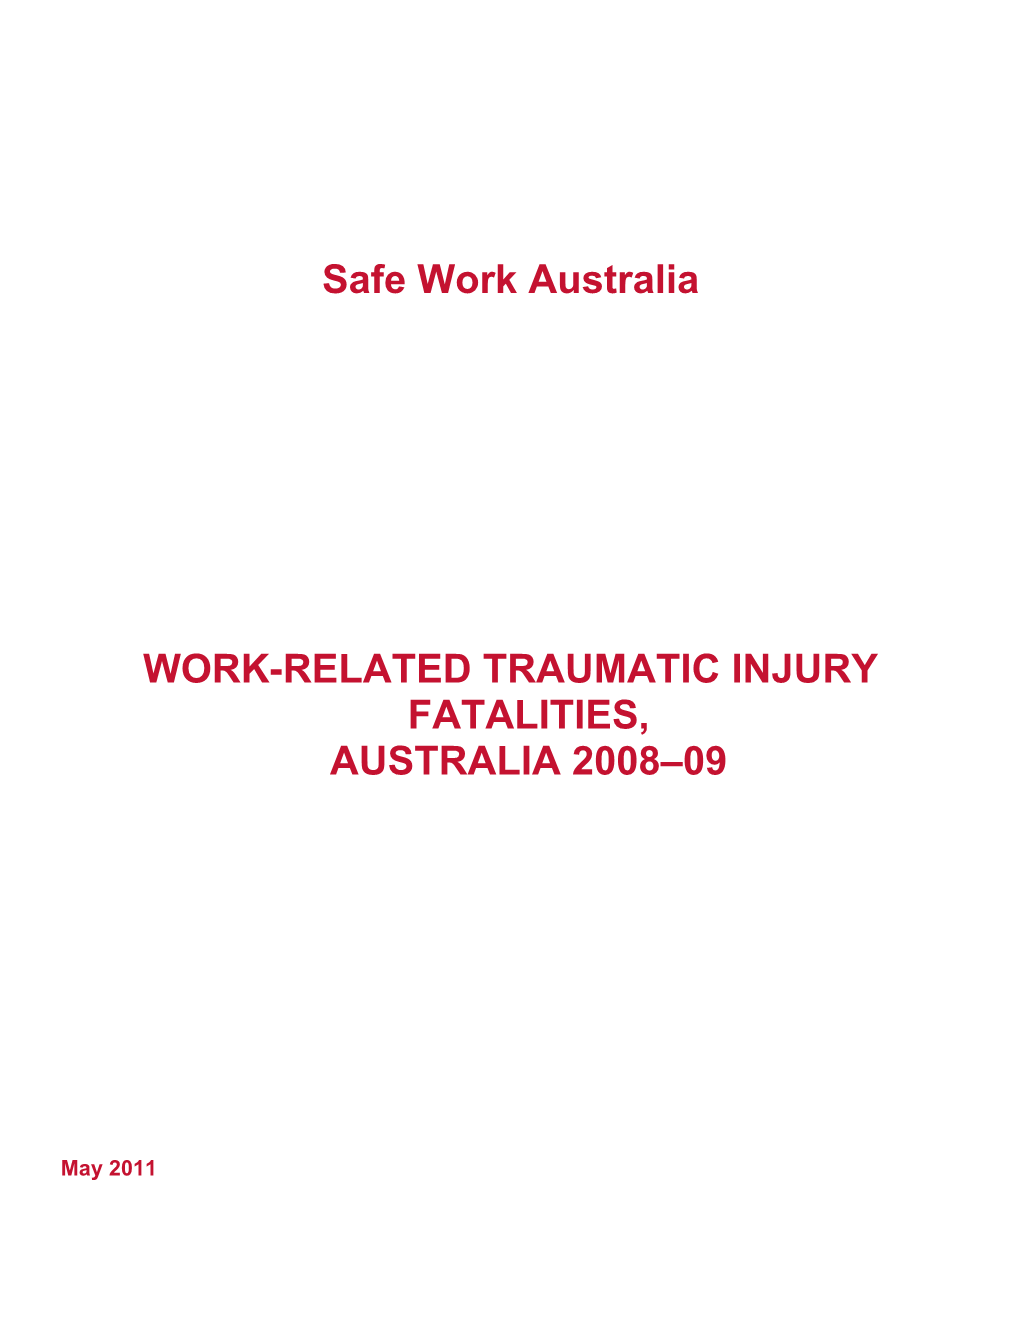 Work-Related Traumatic Injury Fatalities 2008-09